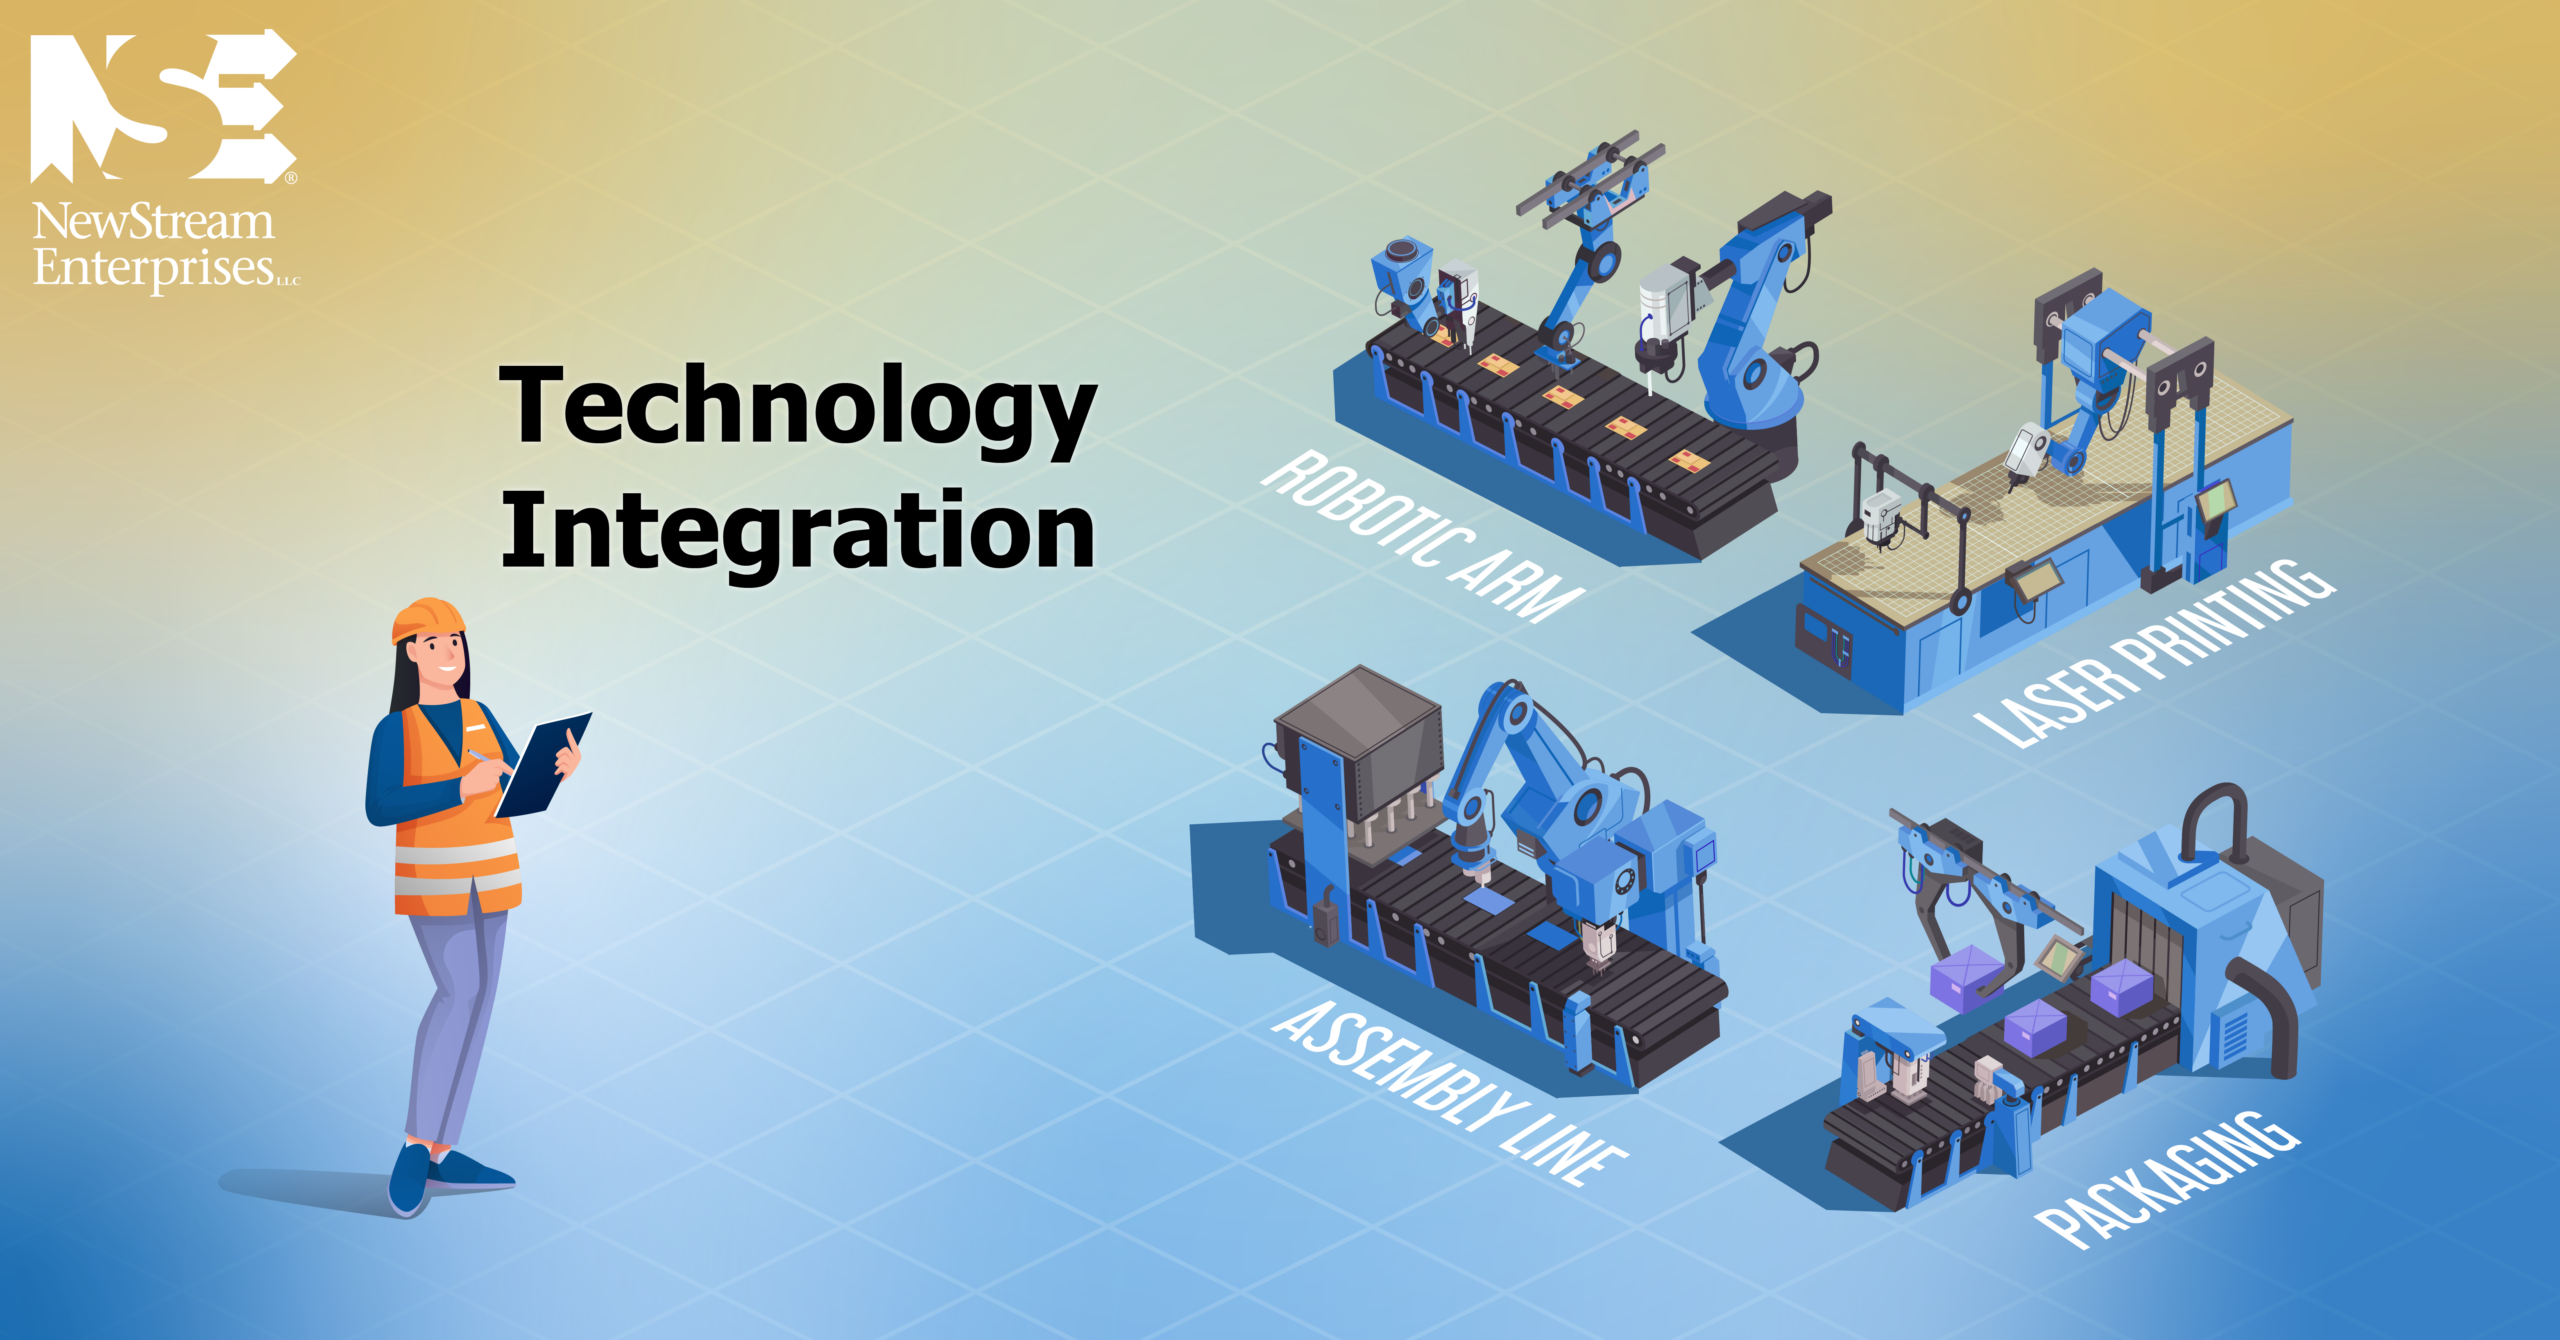 Technology Integration